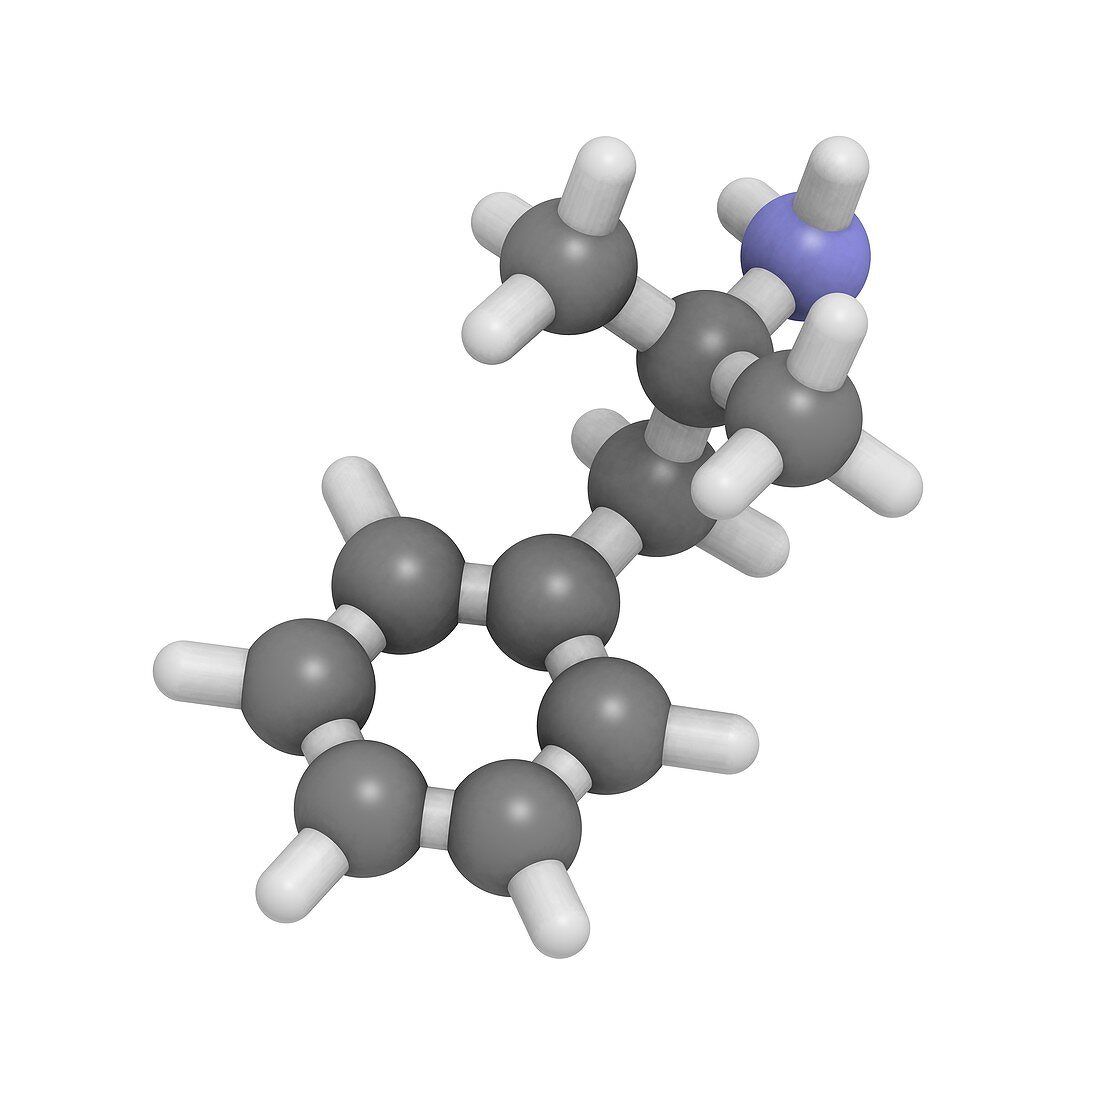 Phentermine obesity drug molecule